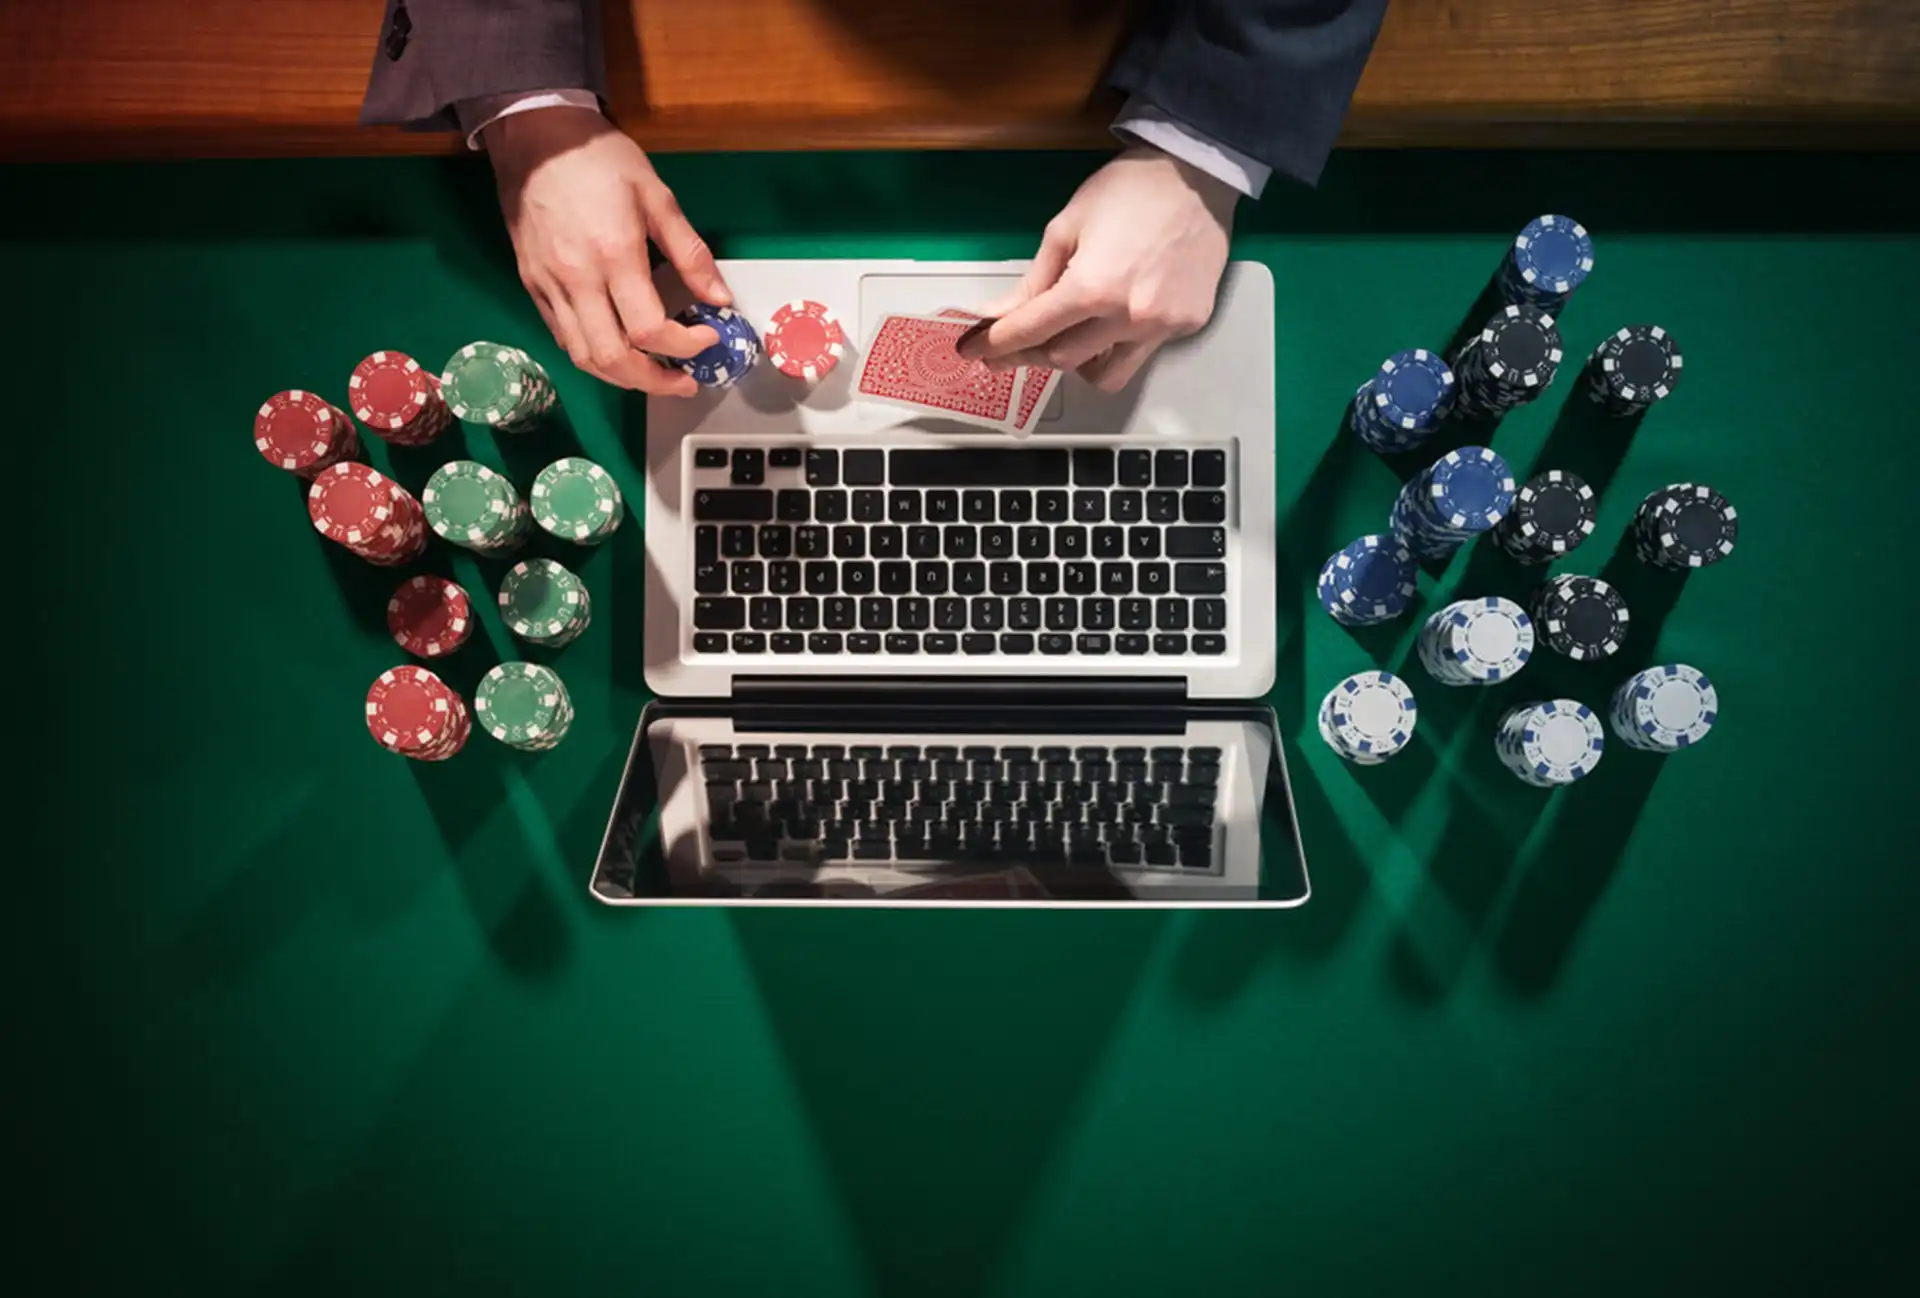 Illegal Betting, Online Gambling